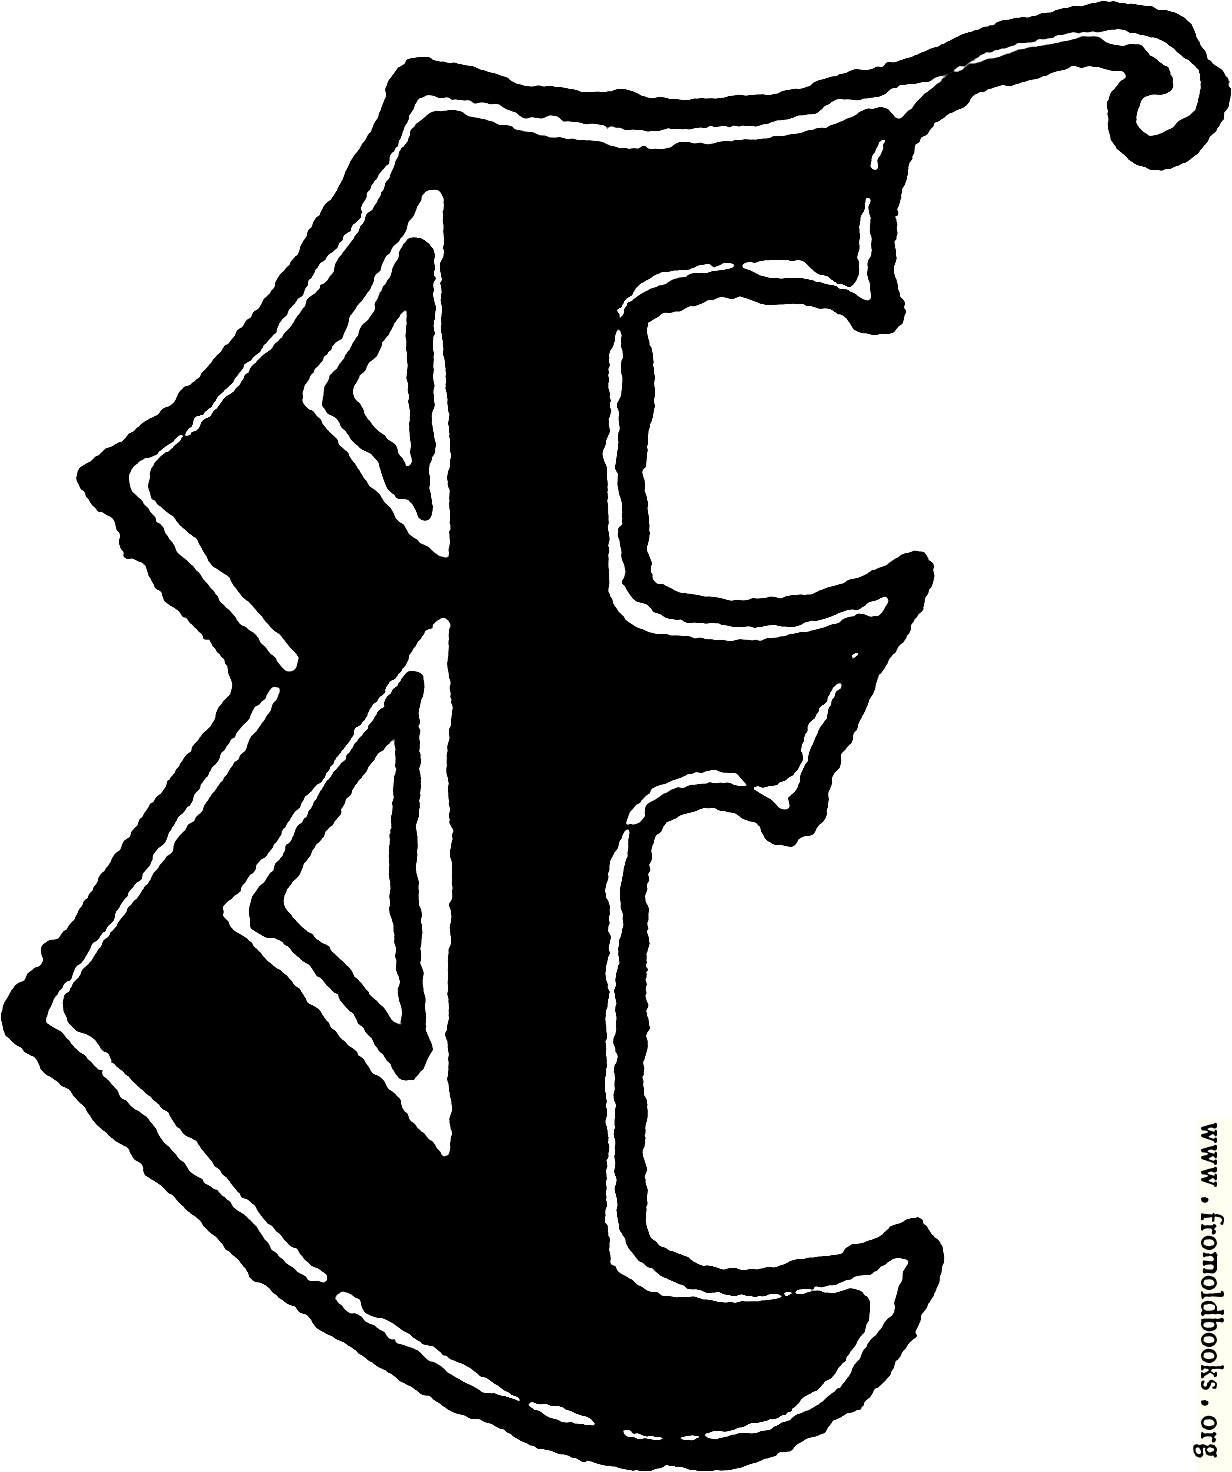 kreupel gelei een vuurtje stoken FOBO - Calligraphic letter “E” in 15th century gothic style